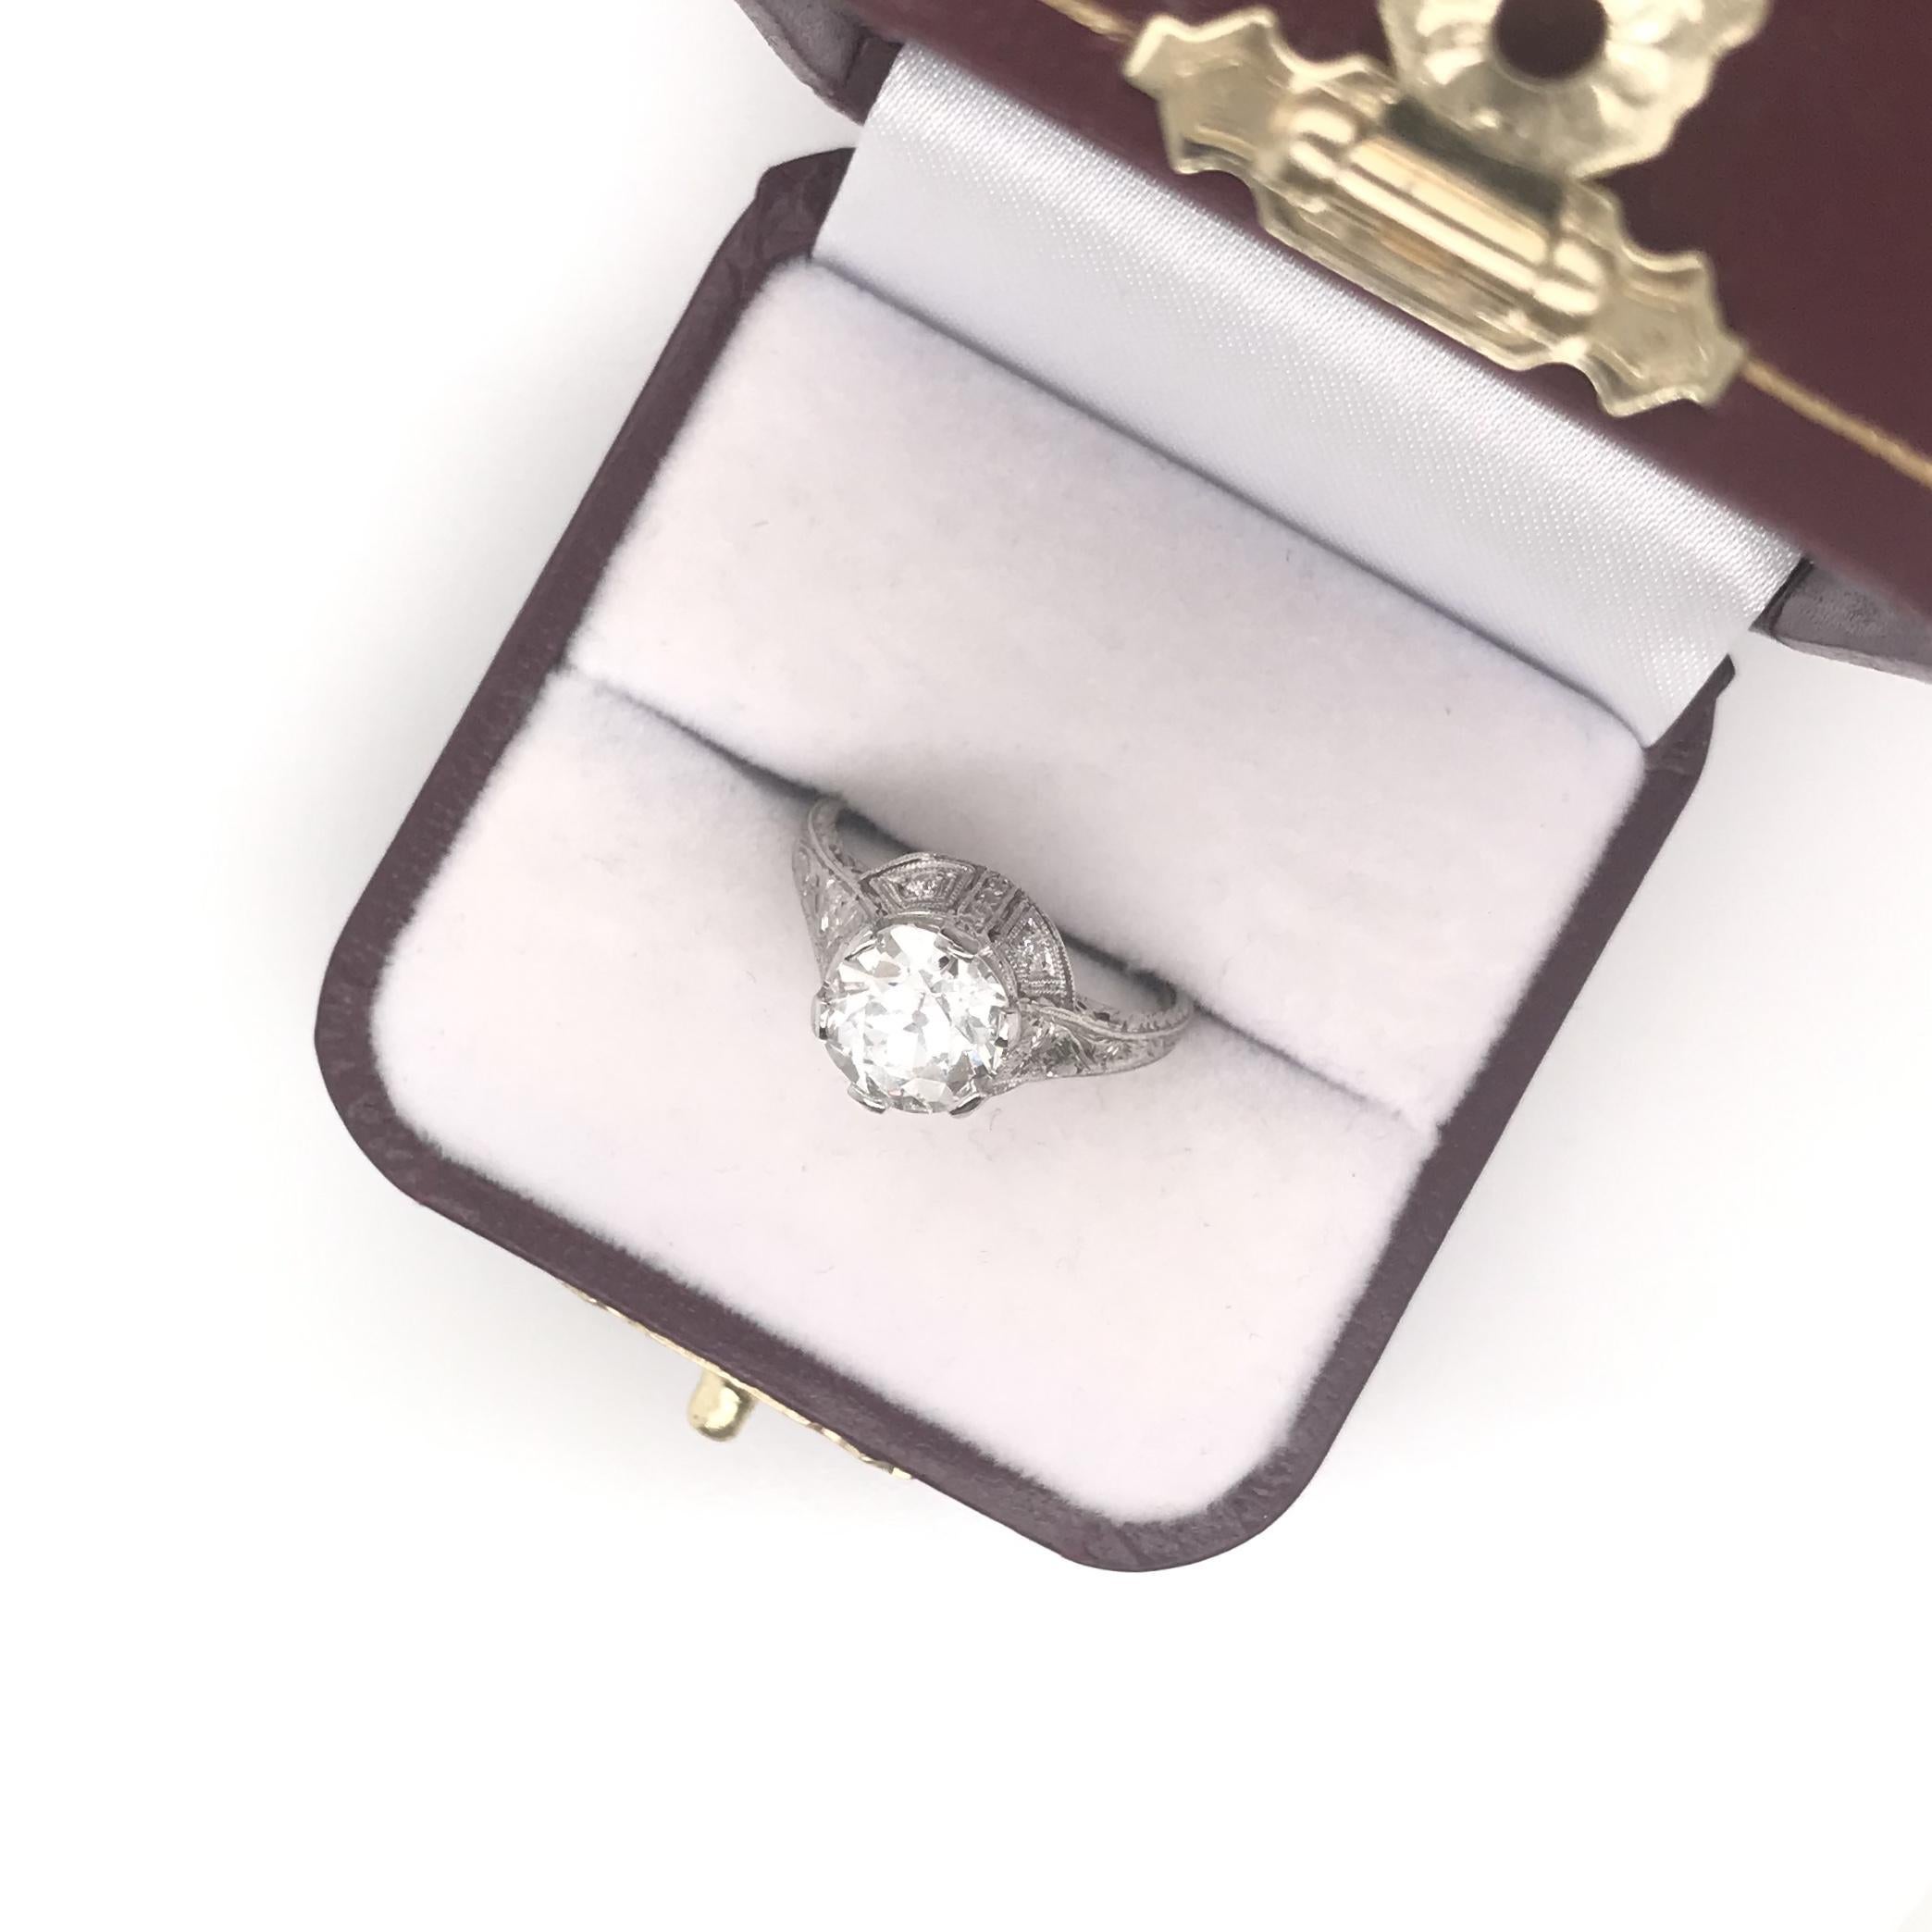 Antique Edwardian 2.07 Carat Old Mine Cut Diamond Ring For Sale 3